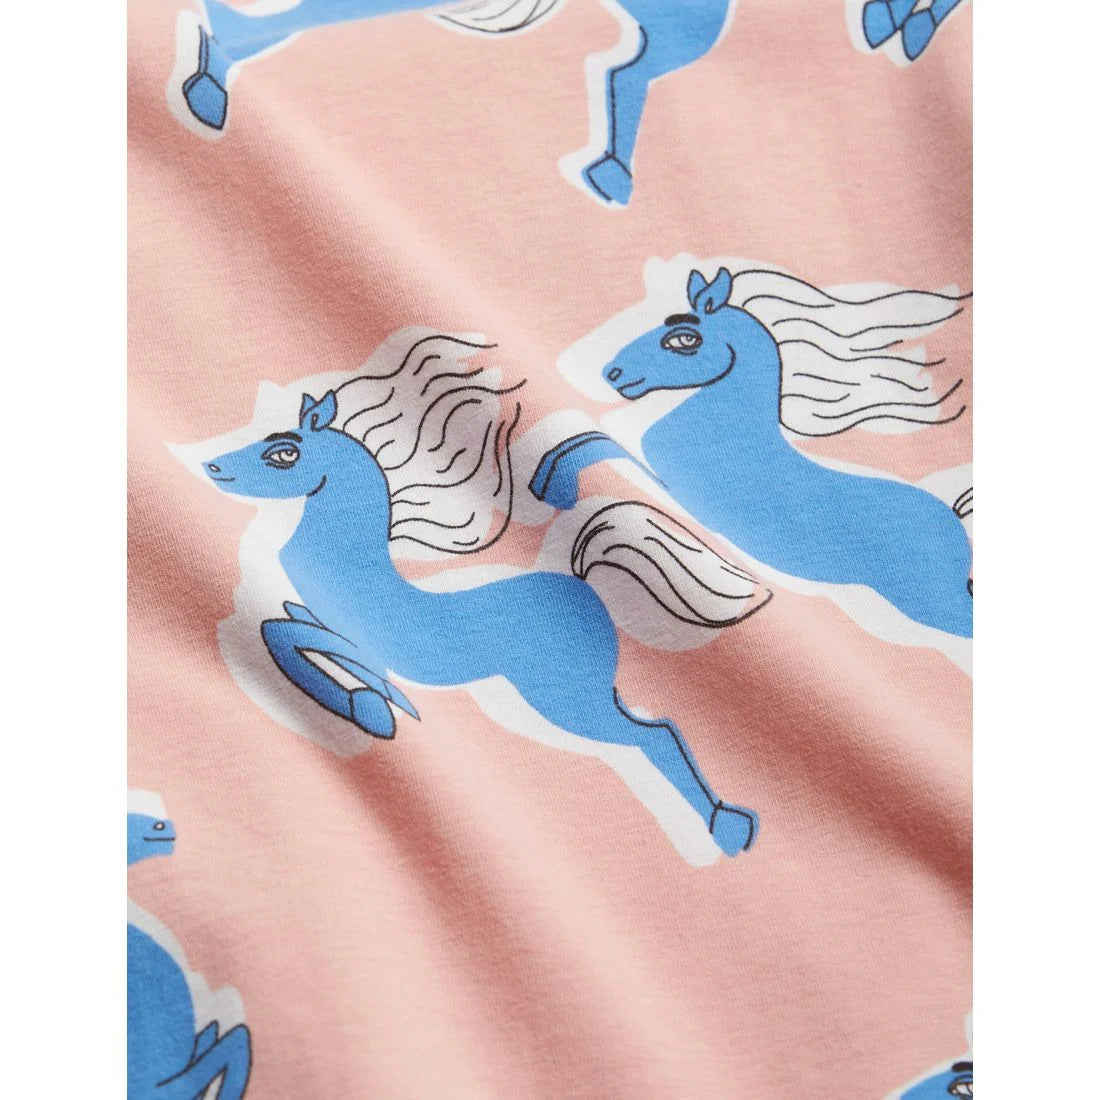 Mini Rodini Horses All Over Print Short Sleeve Tee Pink